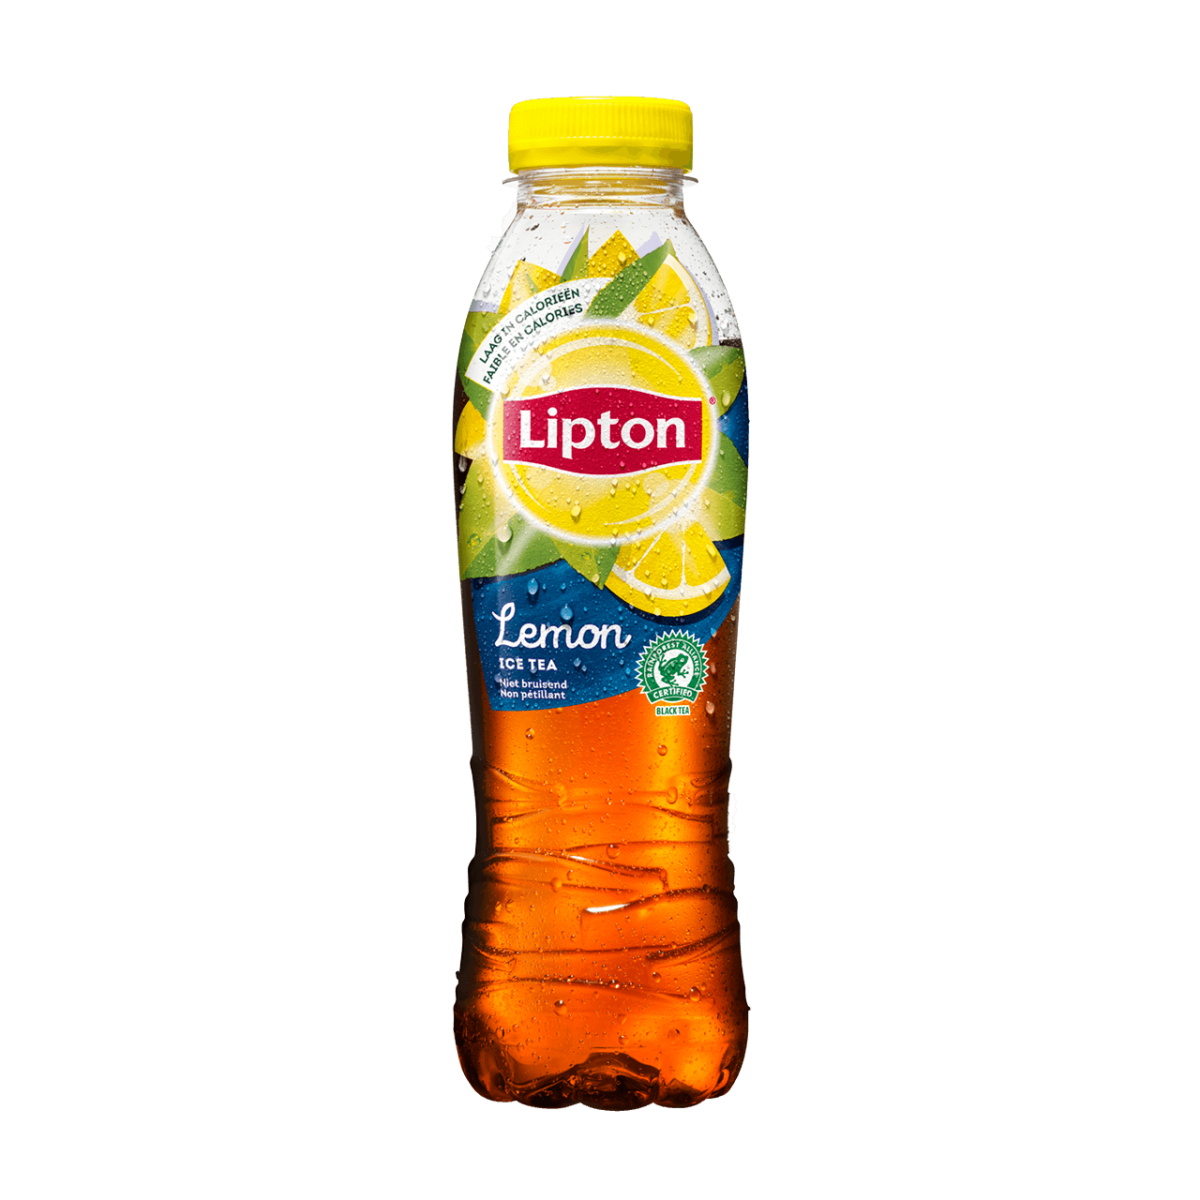 Lipton Ice Tea 0.5. Липтон чай лимон 0.5. Чай Липтон 0.5. Липтон зеленый чай с лимоном.